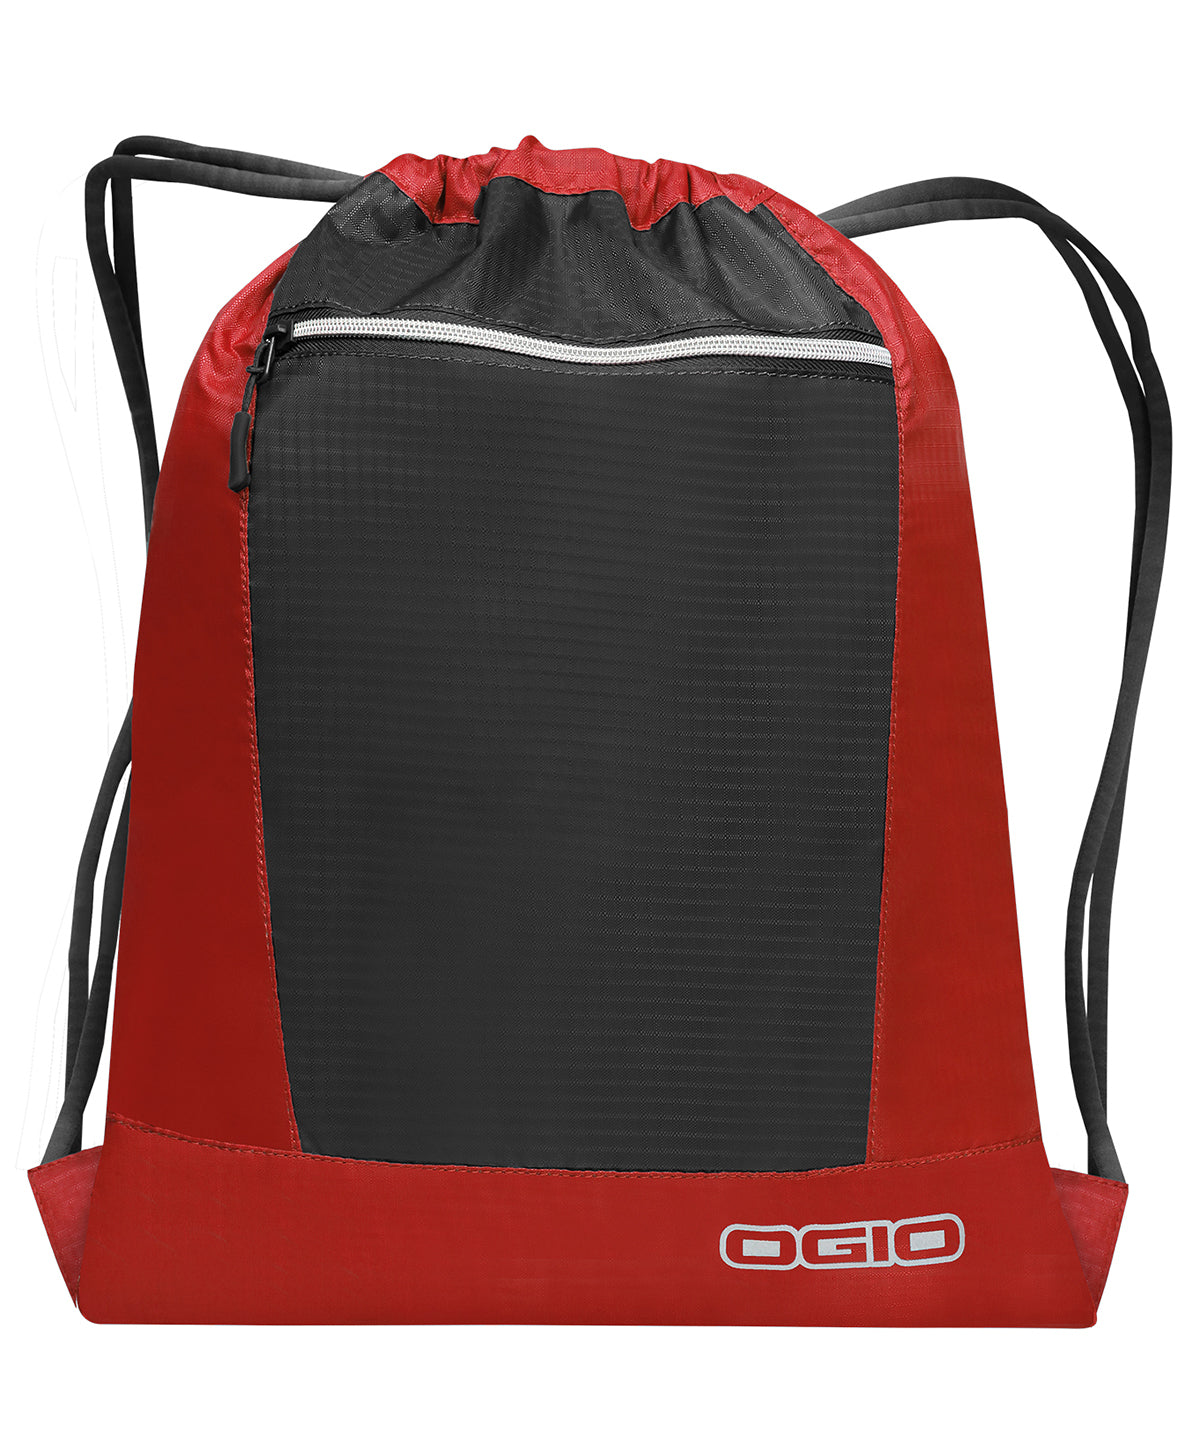 Ogio OG025 Endurance pulse pack - COOZO